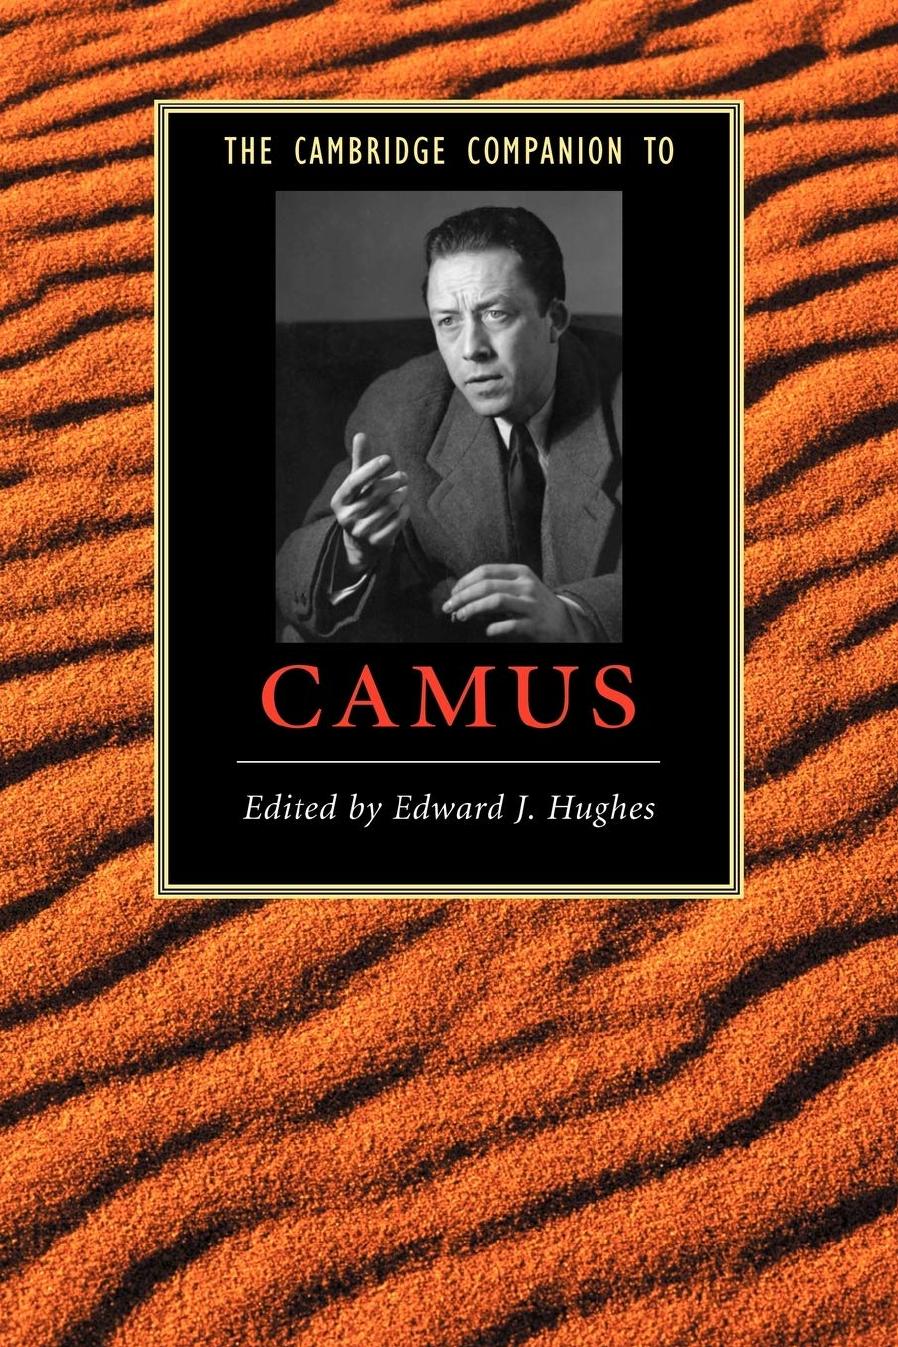 The Cambridge Companion to Camus by Edward J. Hughes (editor)